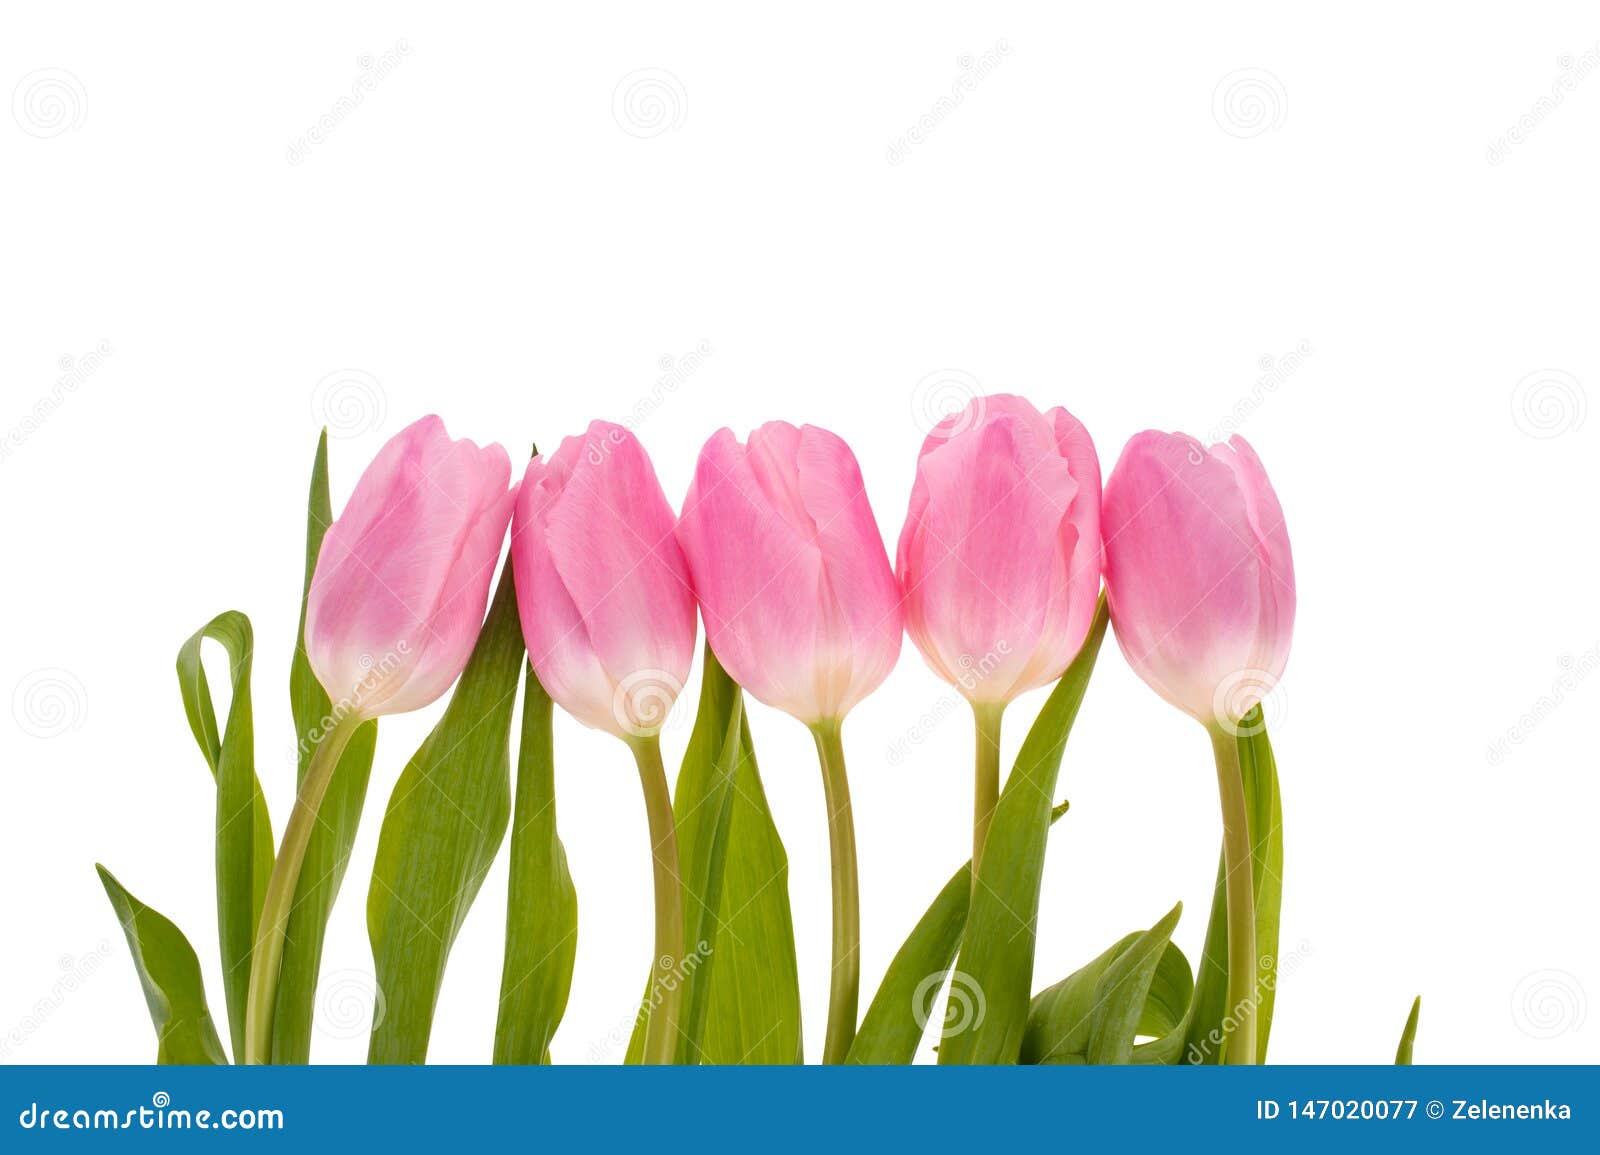 Pink Tulips Flowers Isolated On White Background Stock Image - Image of ...